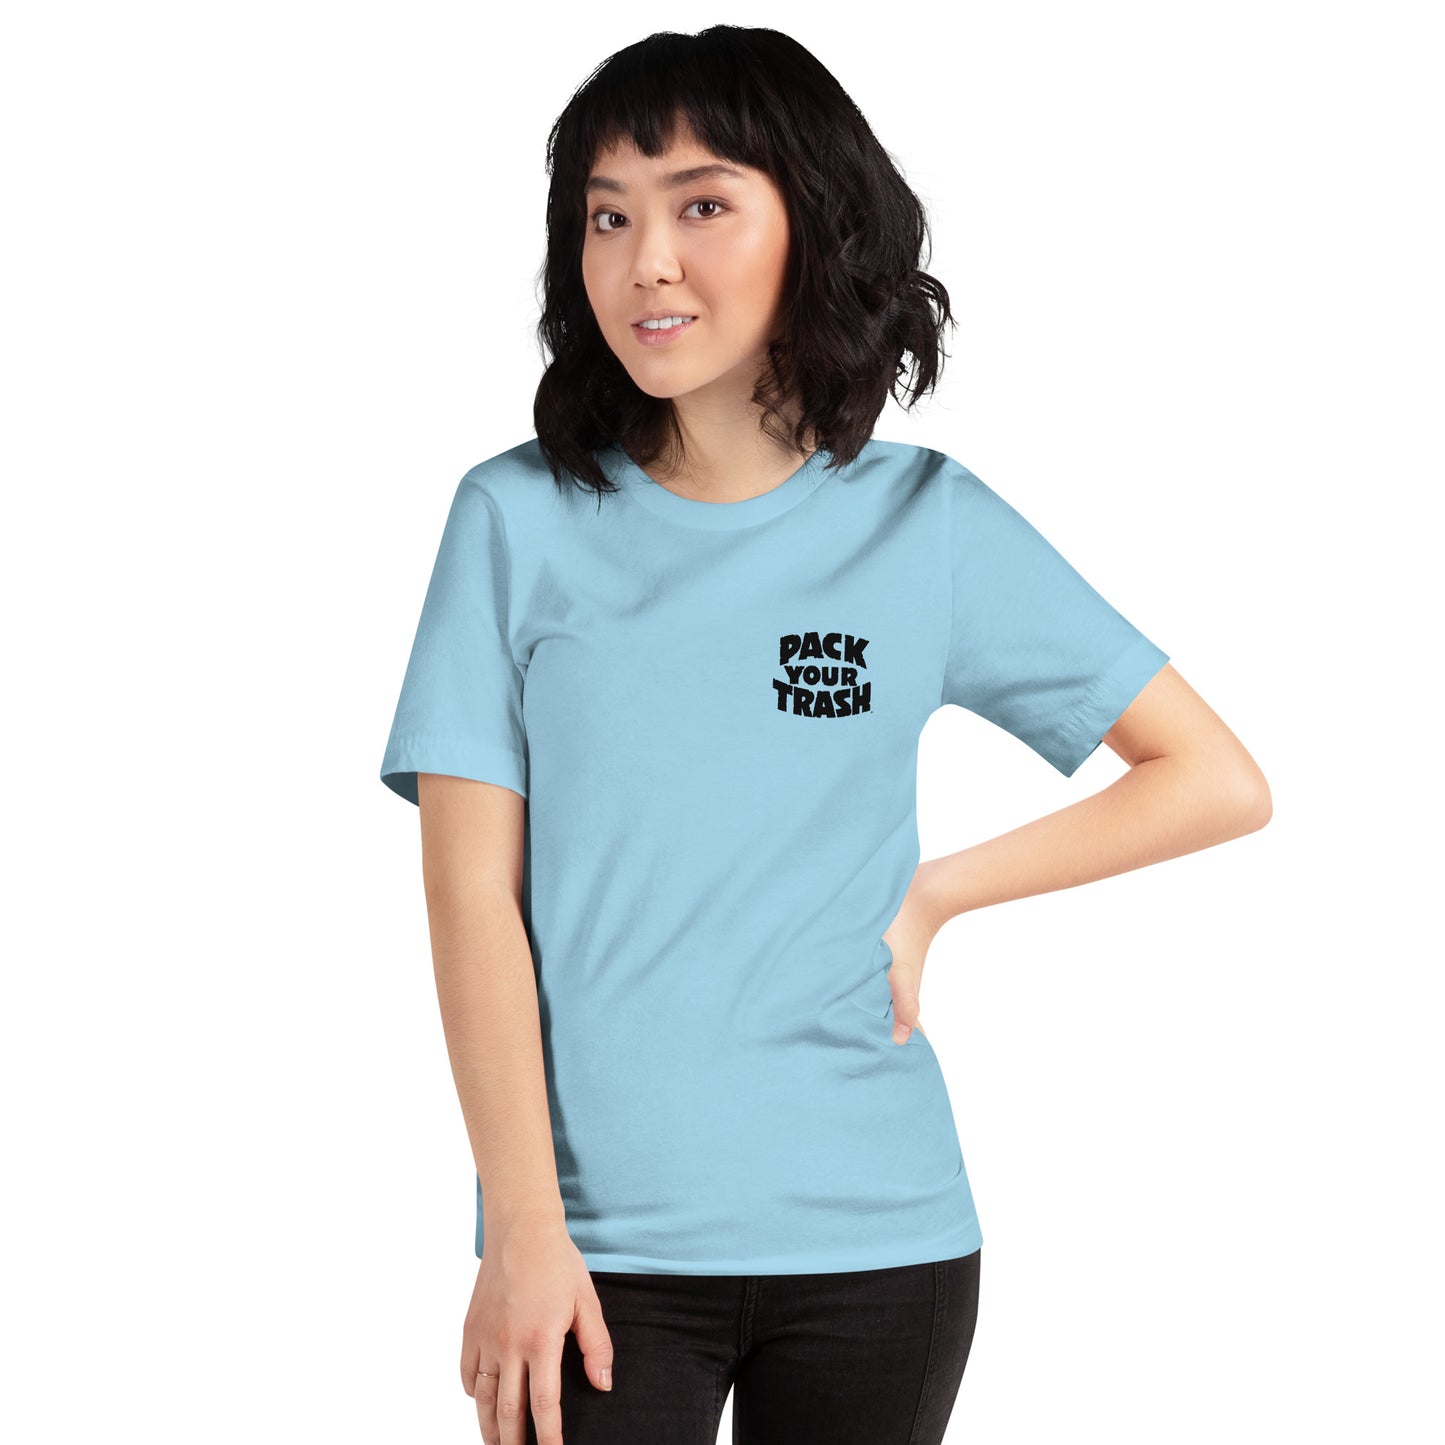 Pack Your Trash - Canoe geek - Unisex t-shirt